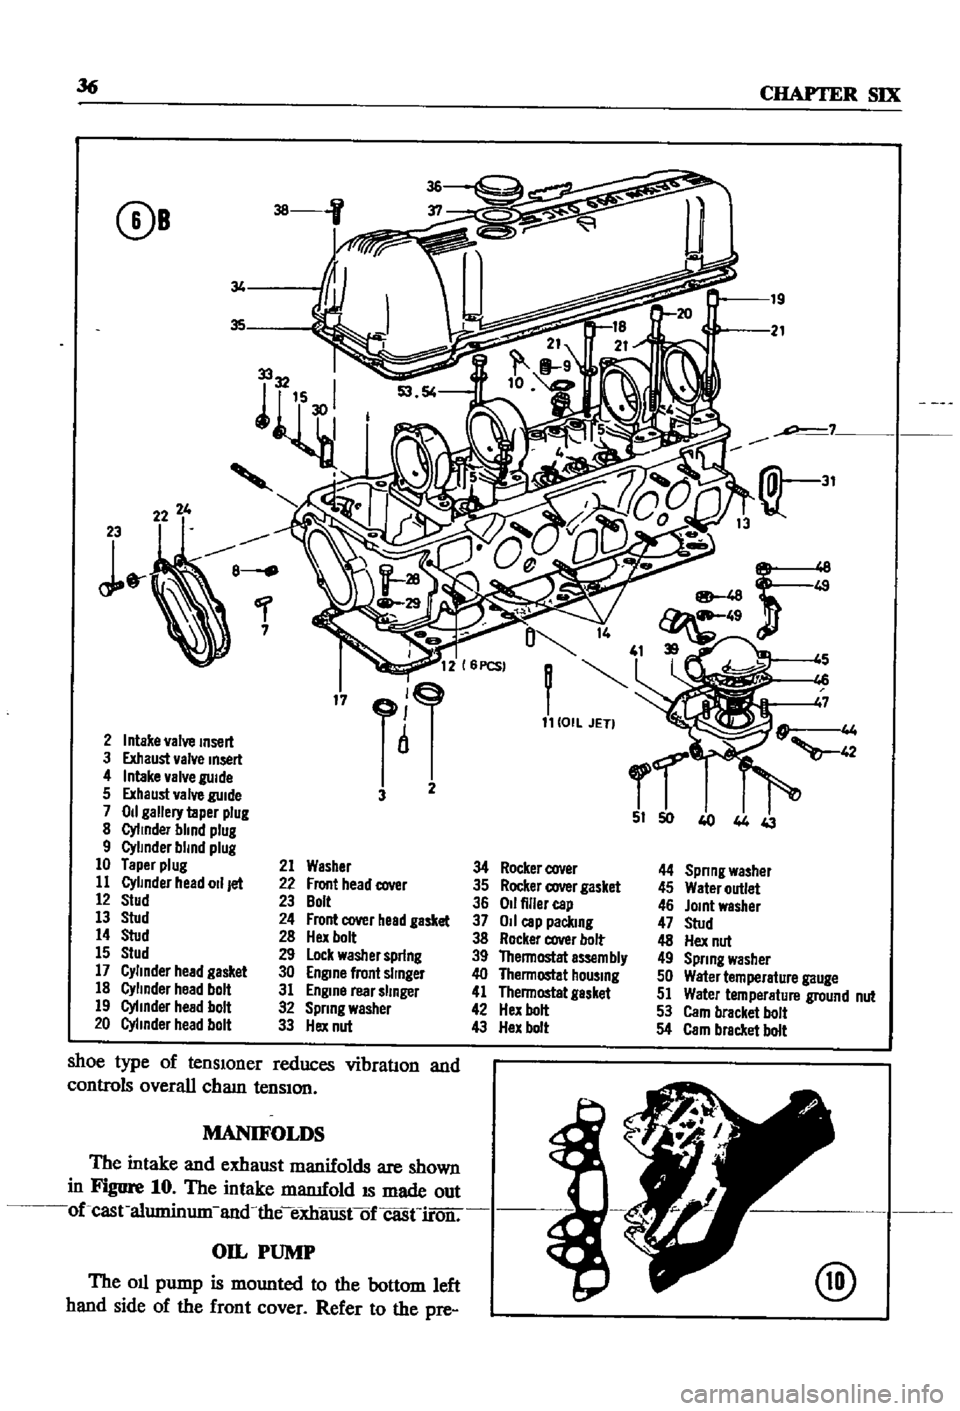 DATSUN 510 1968  Service Repair Manual 
36 
CHAPTER 
SIX

0B

34

35

2224 
19

21

p 
7

31

13

4

7

O

41

rlj
17

11 
lOlL 
JET

2 
Intake 
valve

Insert

3 
Exhaust 
valve 
Insert

4 
Intake 
valve

guide

5 
Exhaust 
valve

guide 
3